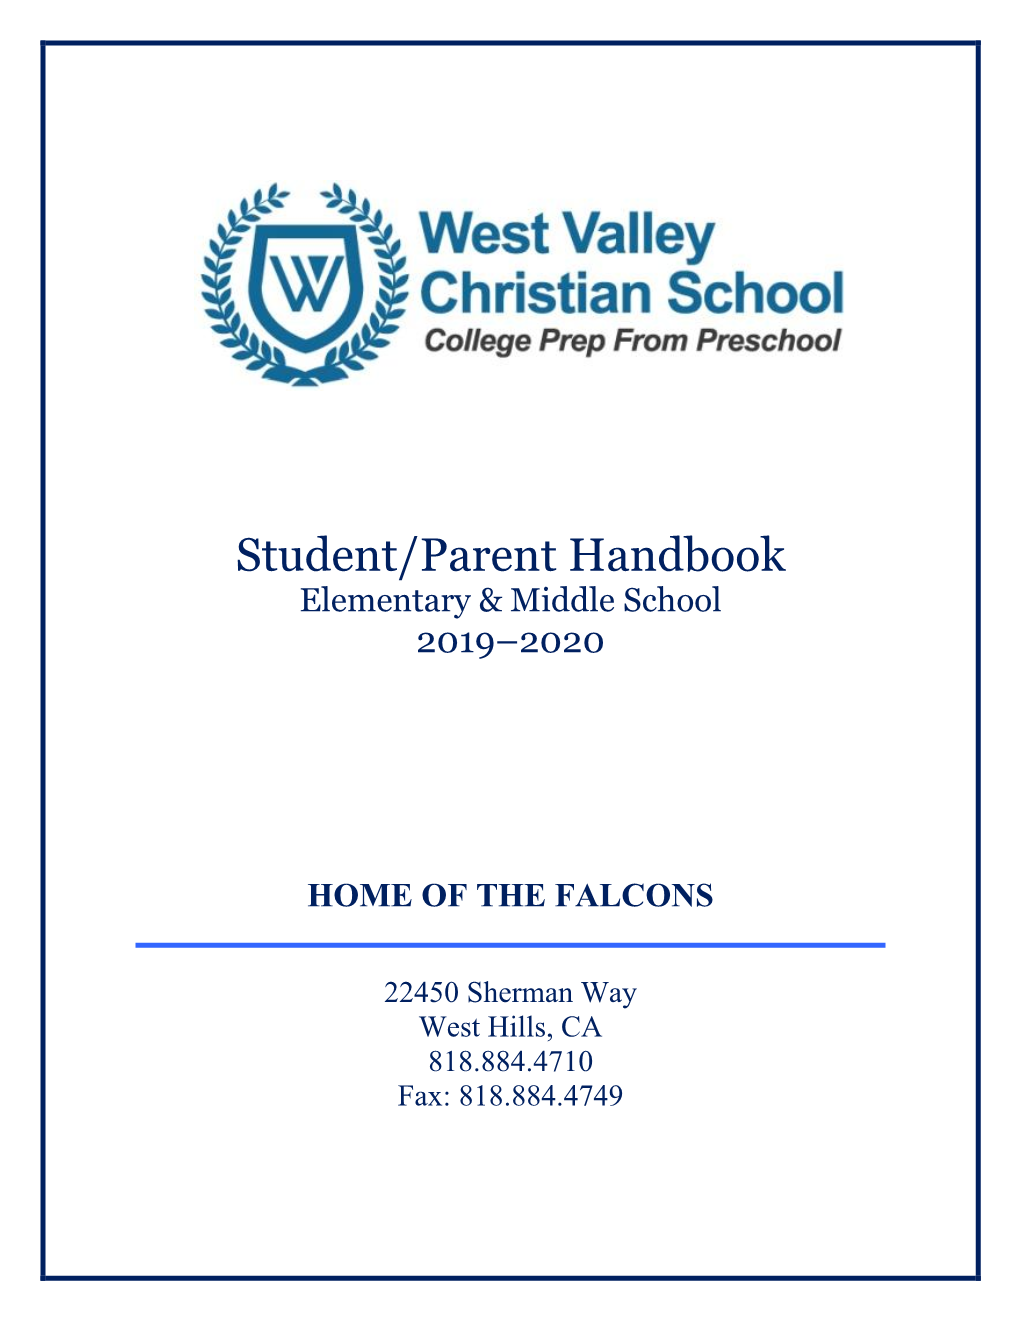 Student/Parent Handbook Elementary & Middle School 2019–2020